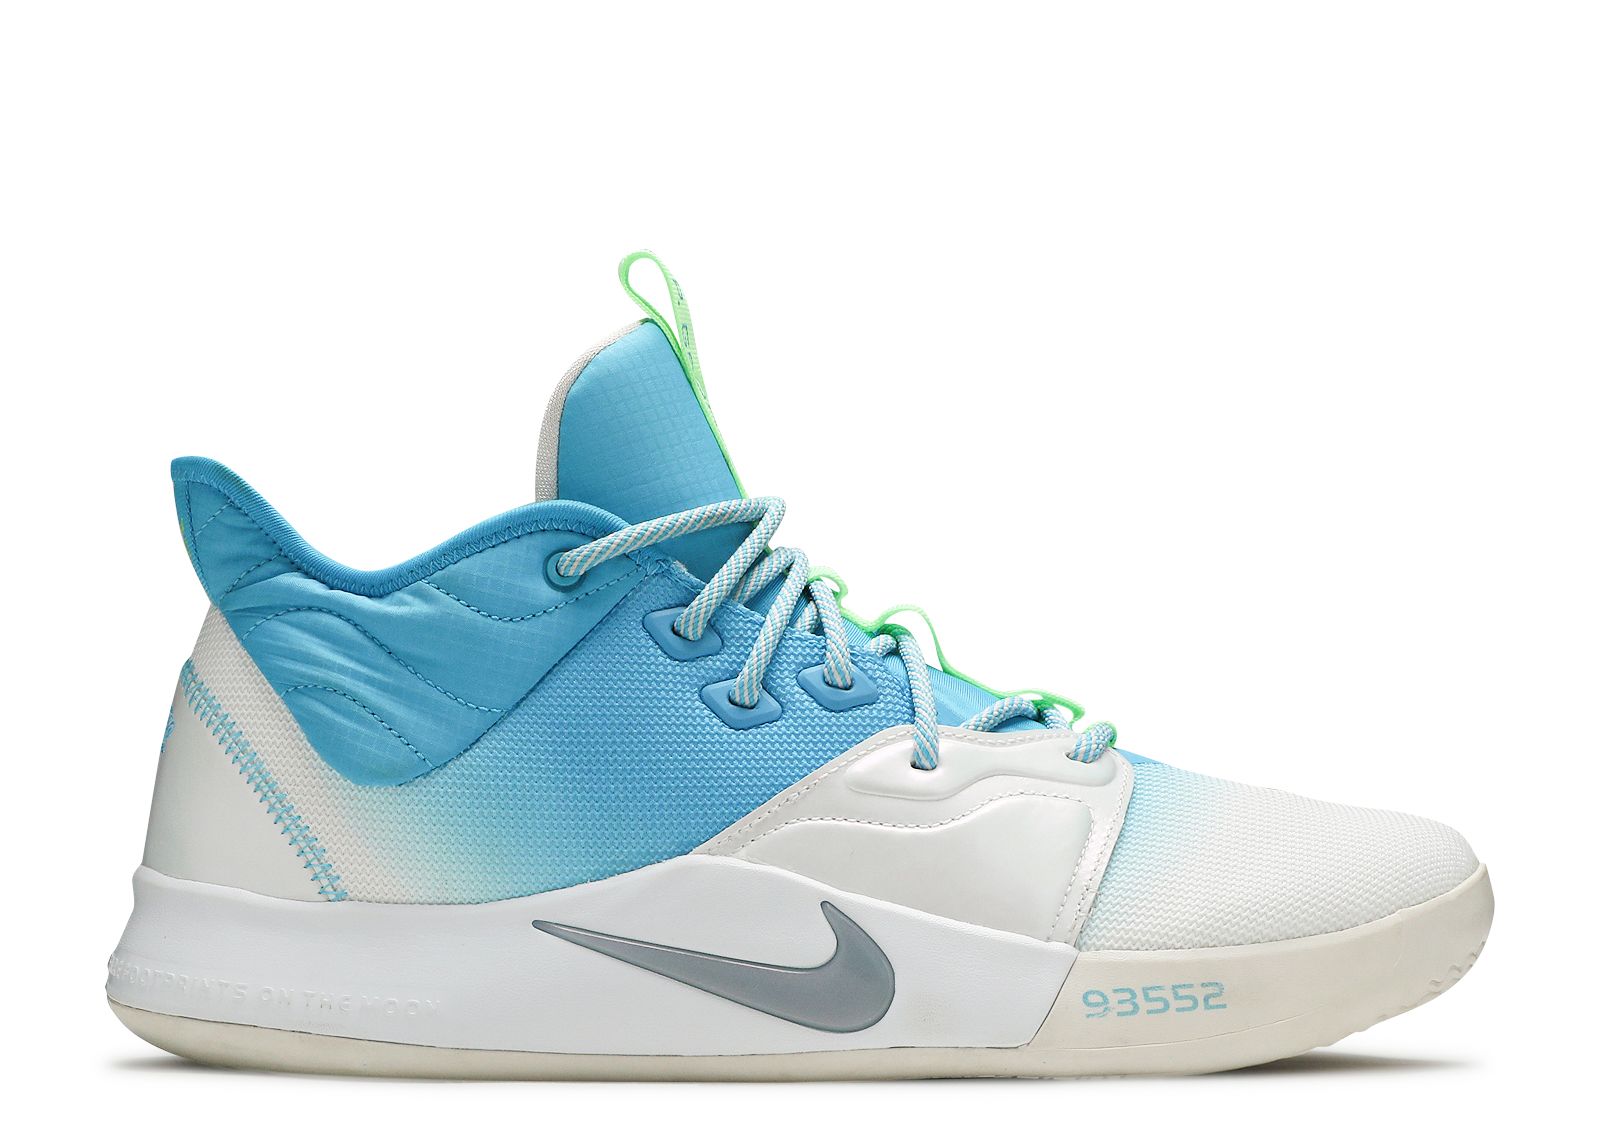 Nike Paul George Basketball Shoes Sneakers